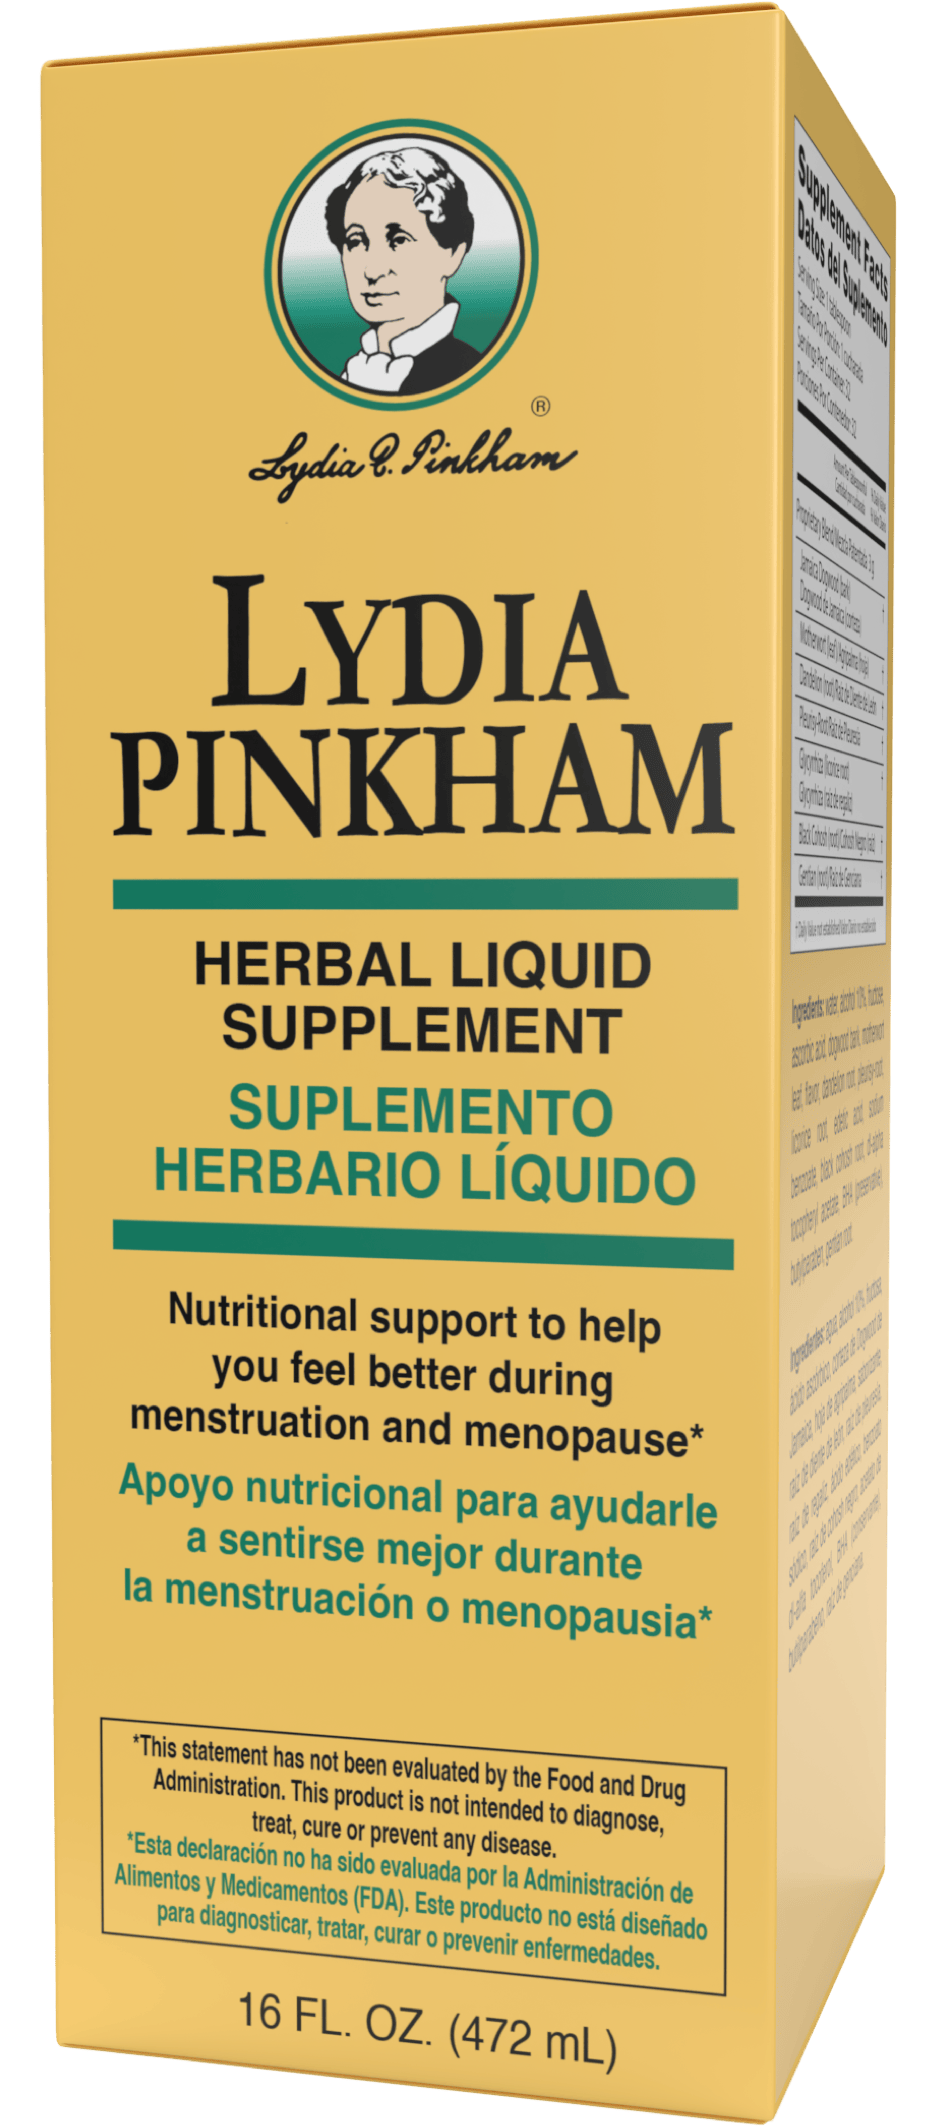 Lydia Pinkham Liquid Compound 16oz. product packaging